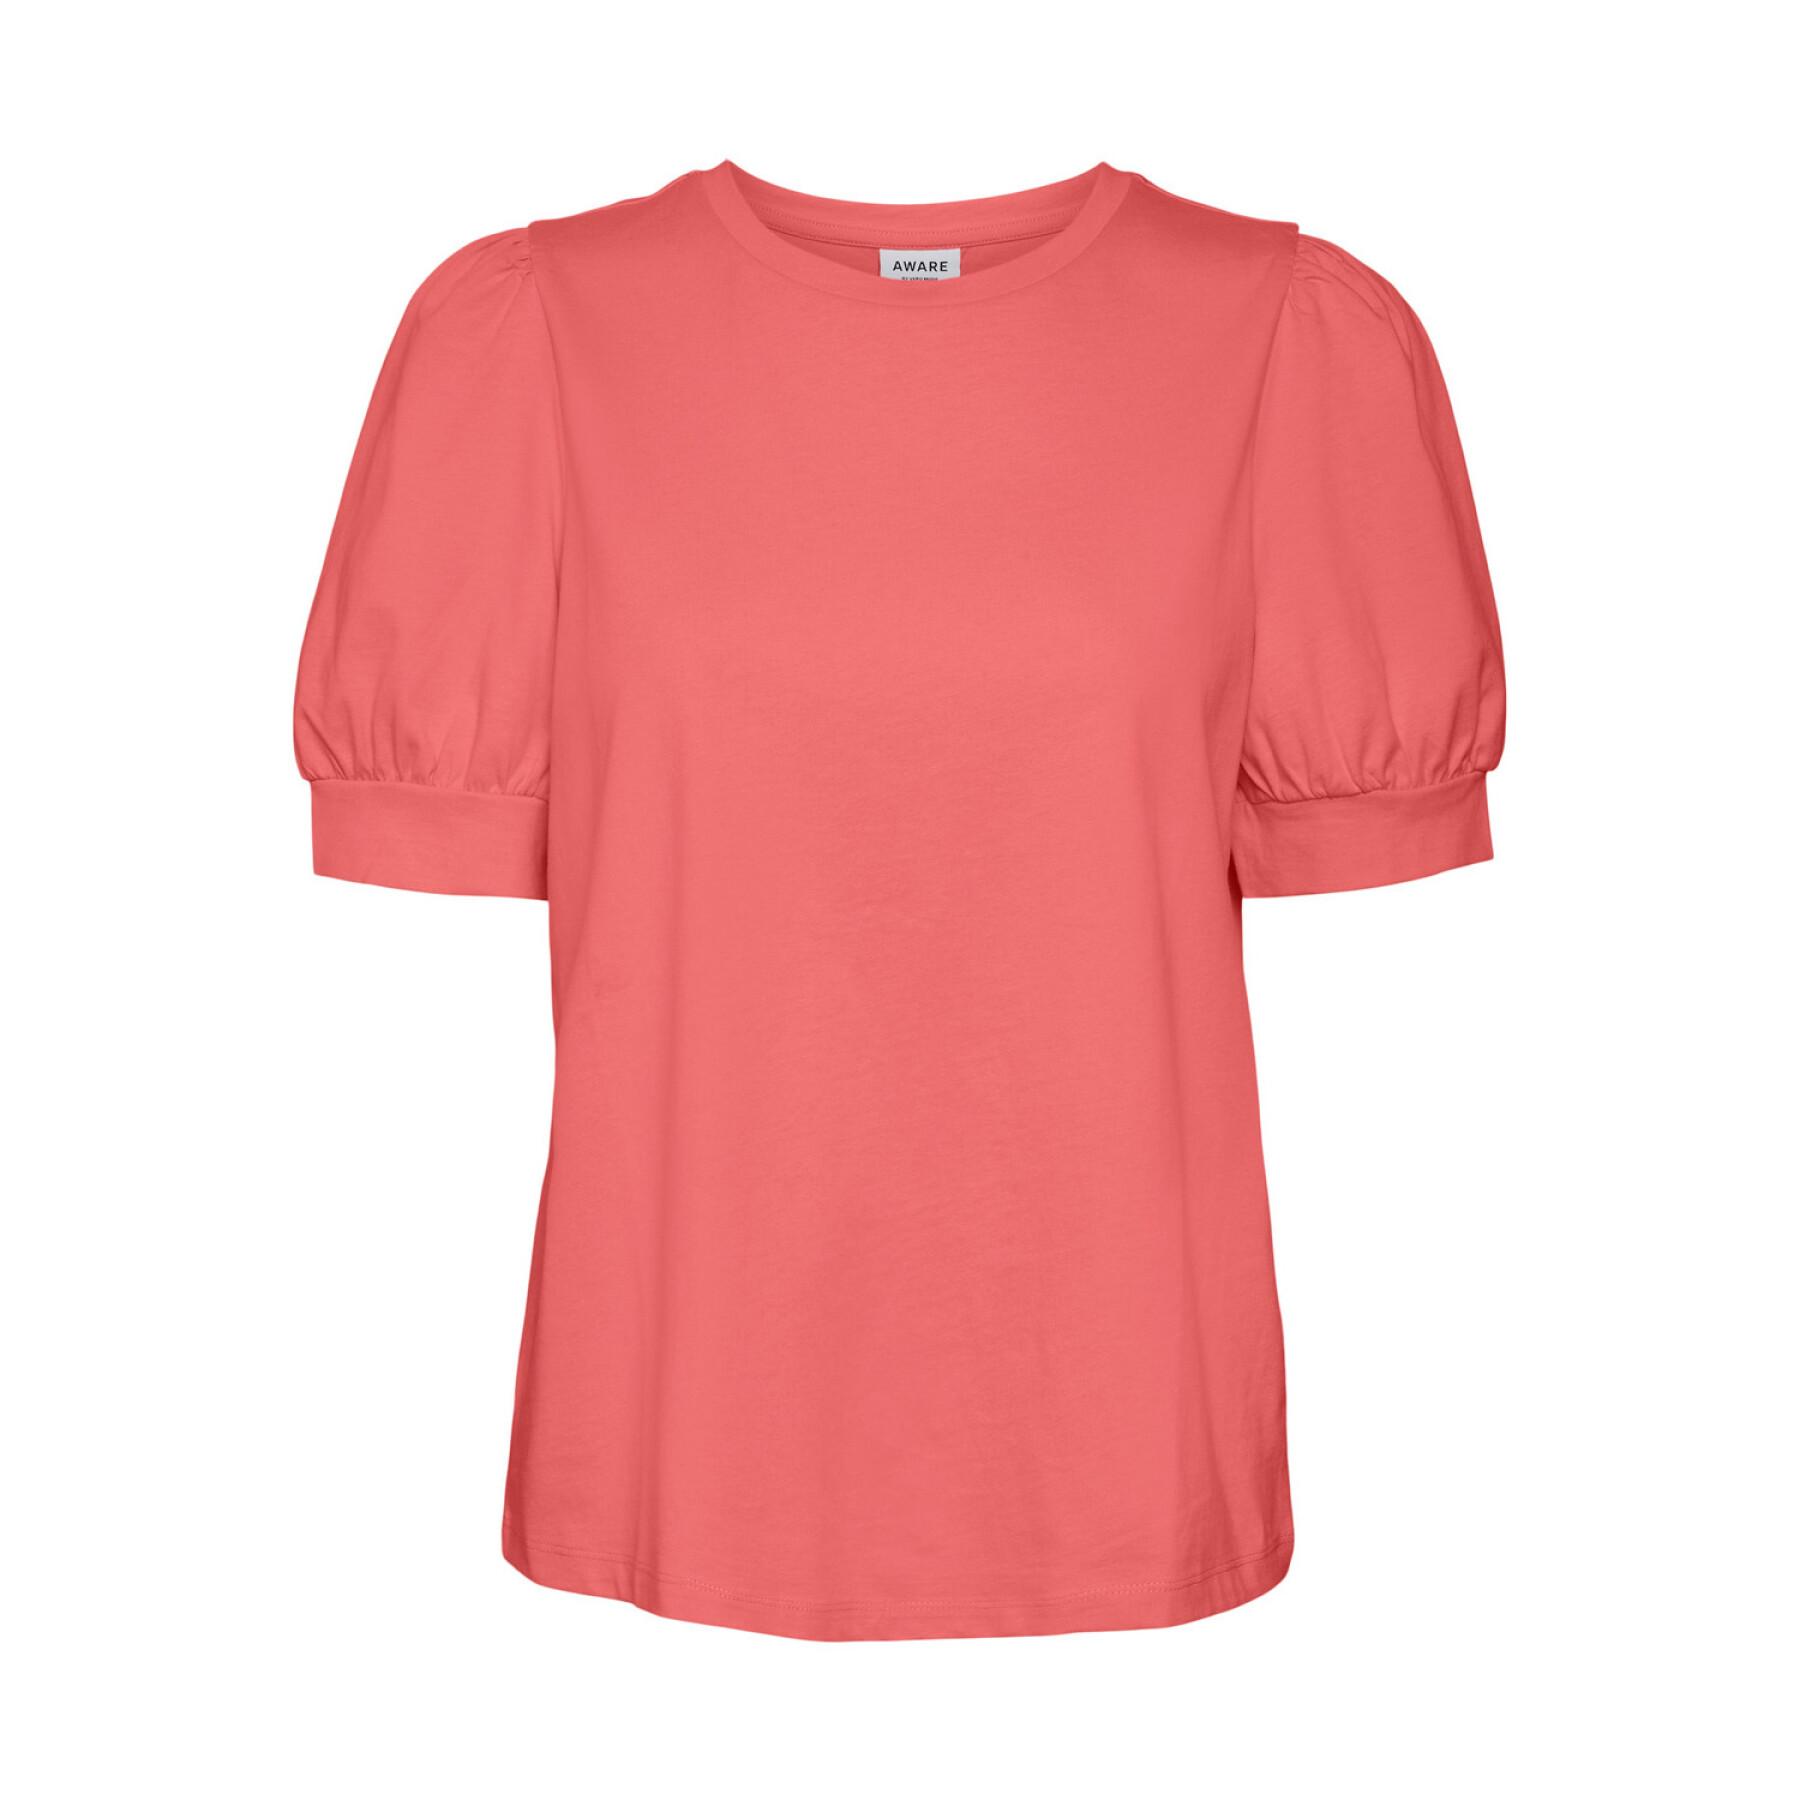 Women's 2/4 sleeve T-shirt Vero Moda Kerry